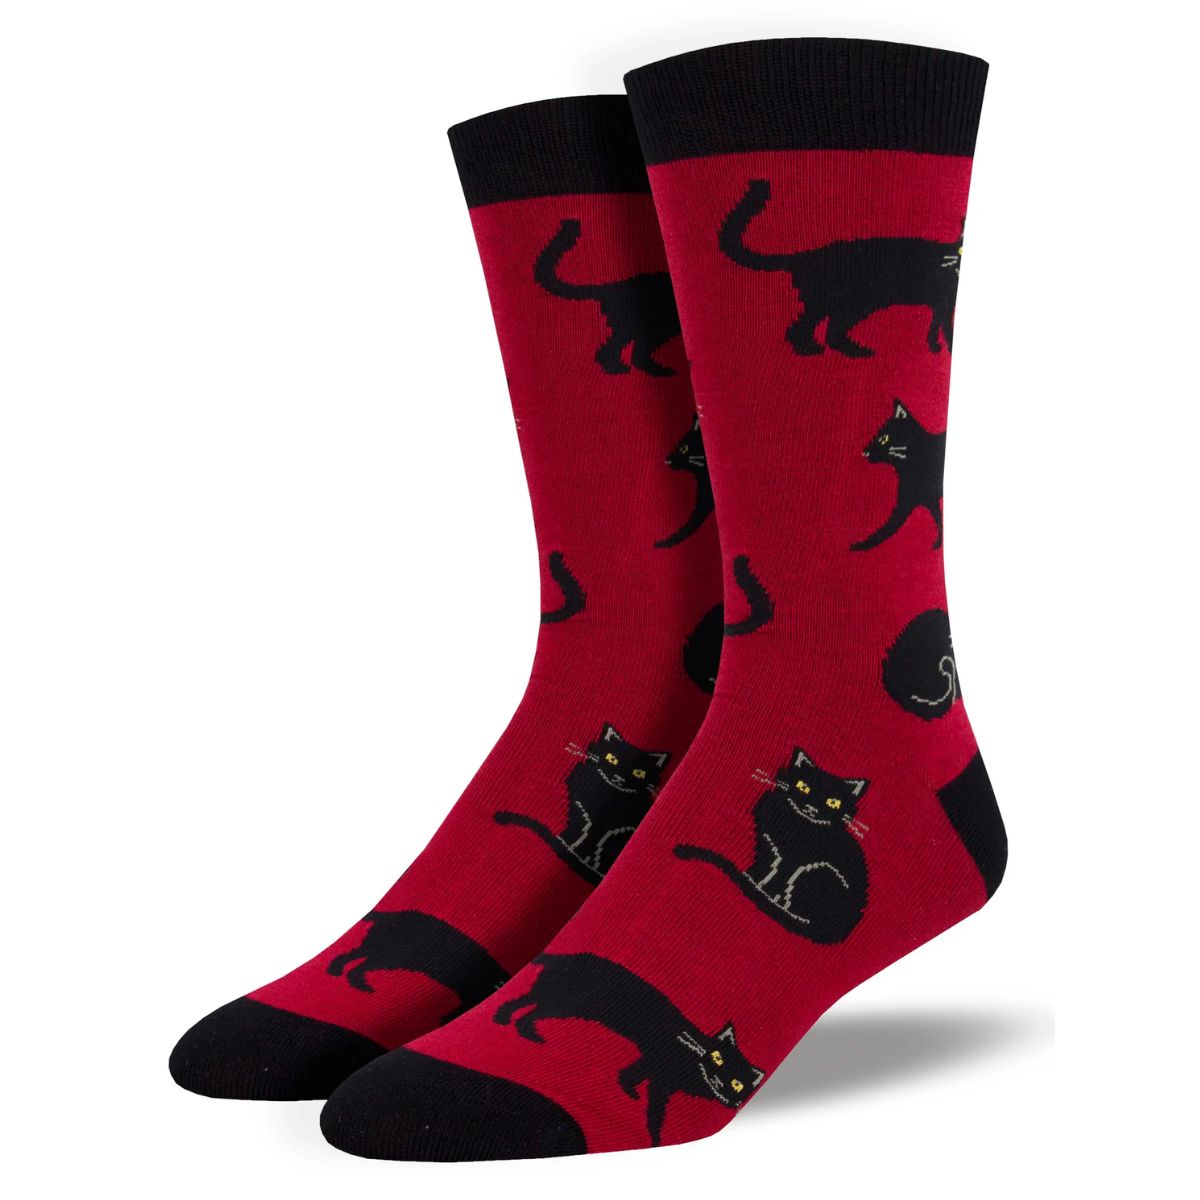 black cat socks a pair of red crew socks with black cat print